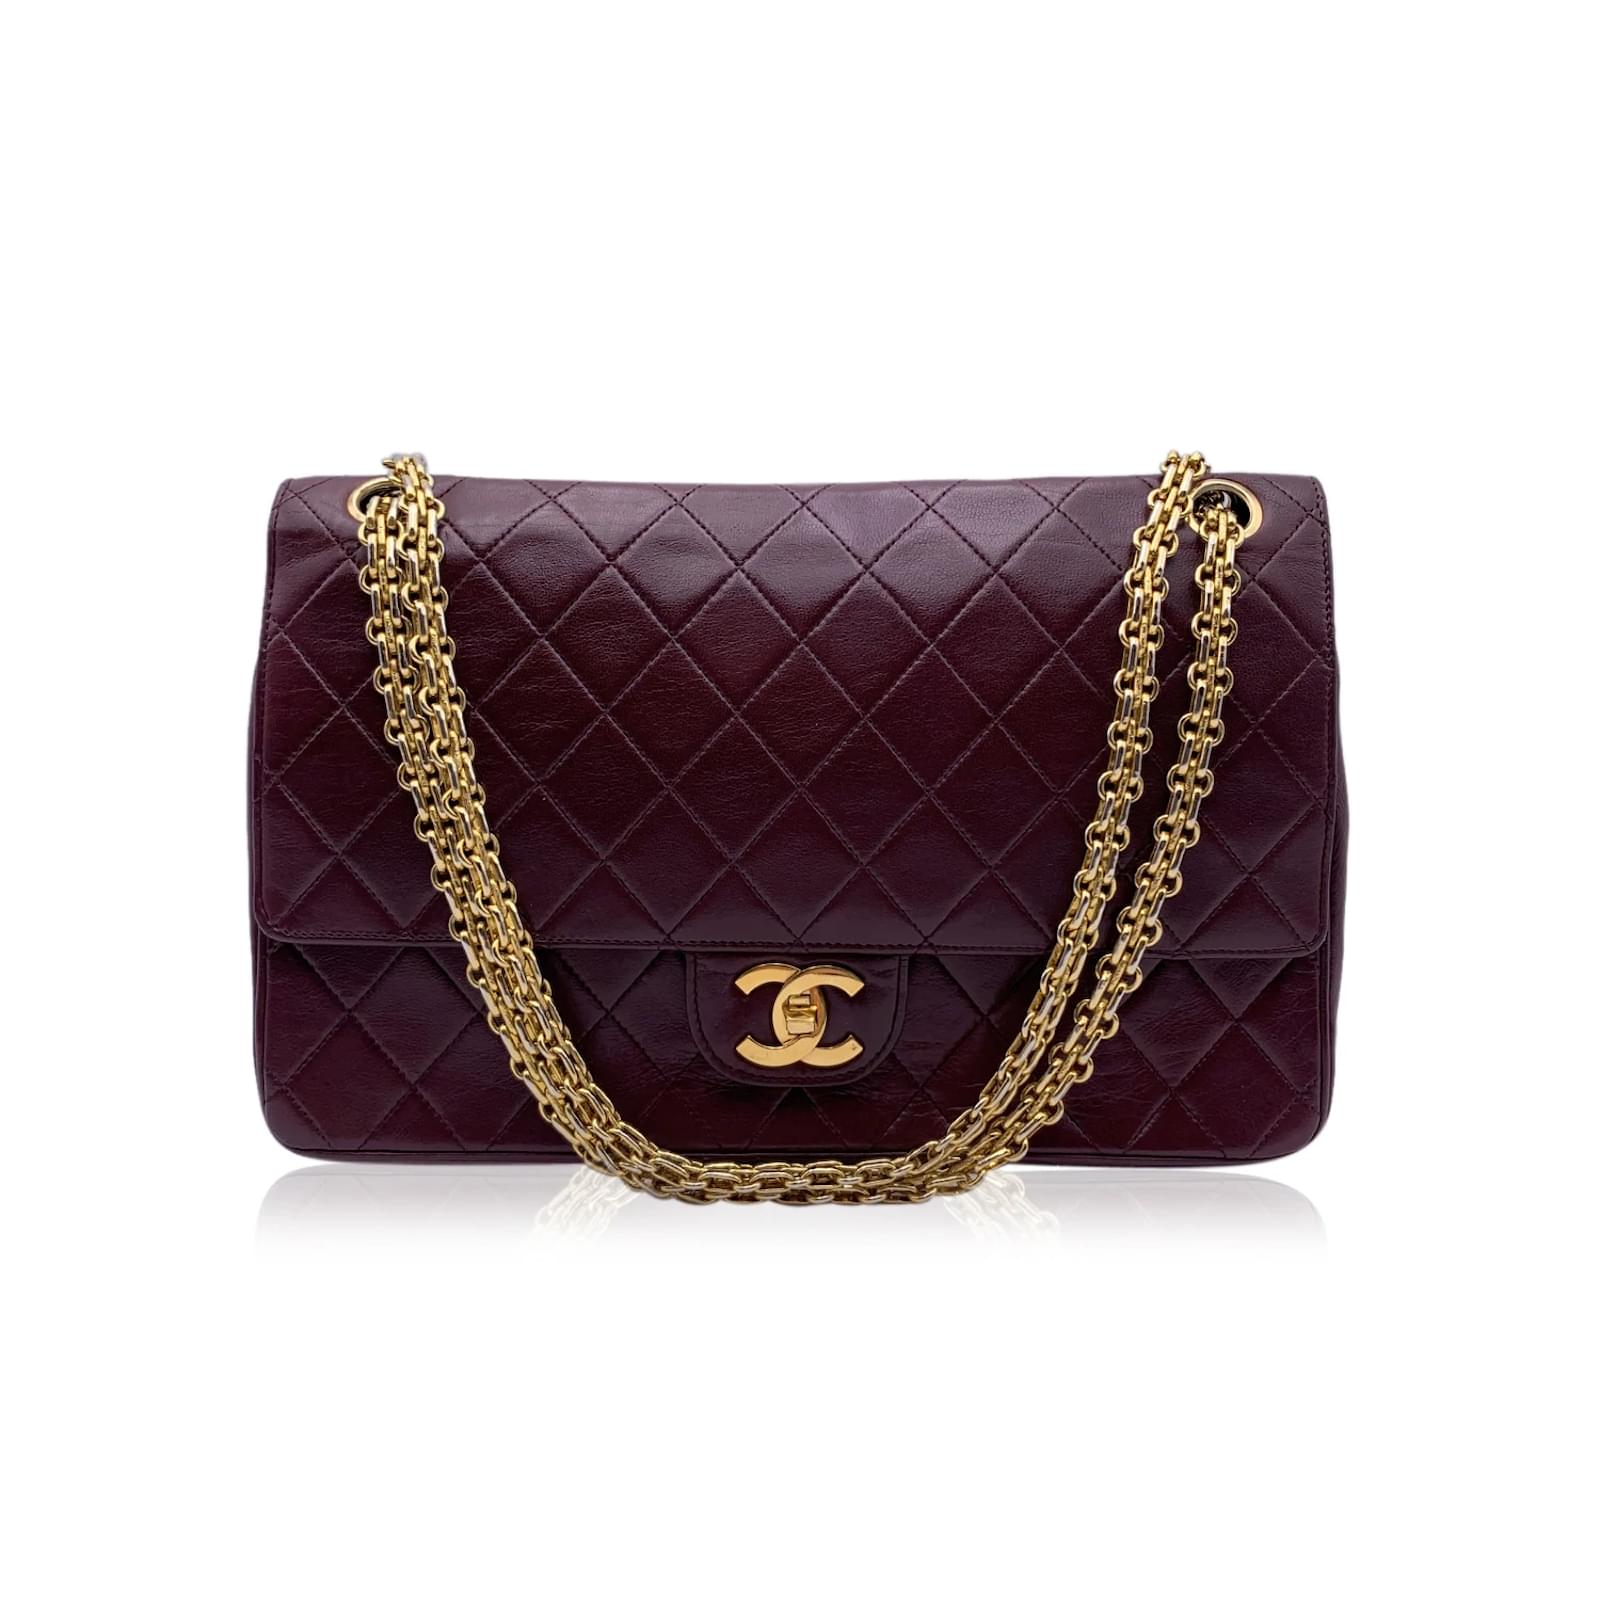 Chanel Vintage Burgundy Leather lined Flap 2.55 Bag Mademoiselle